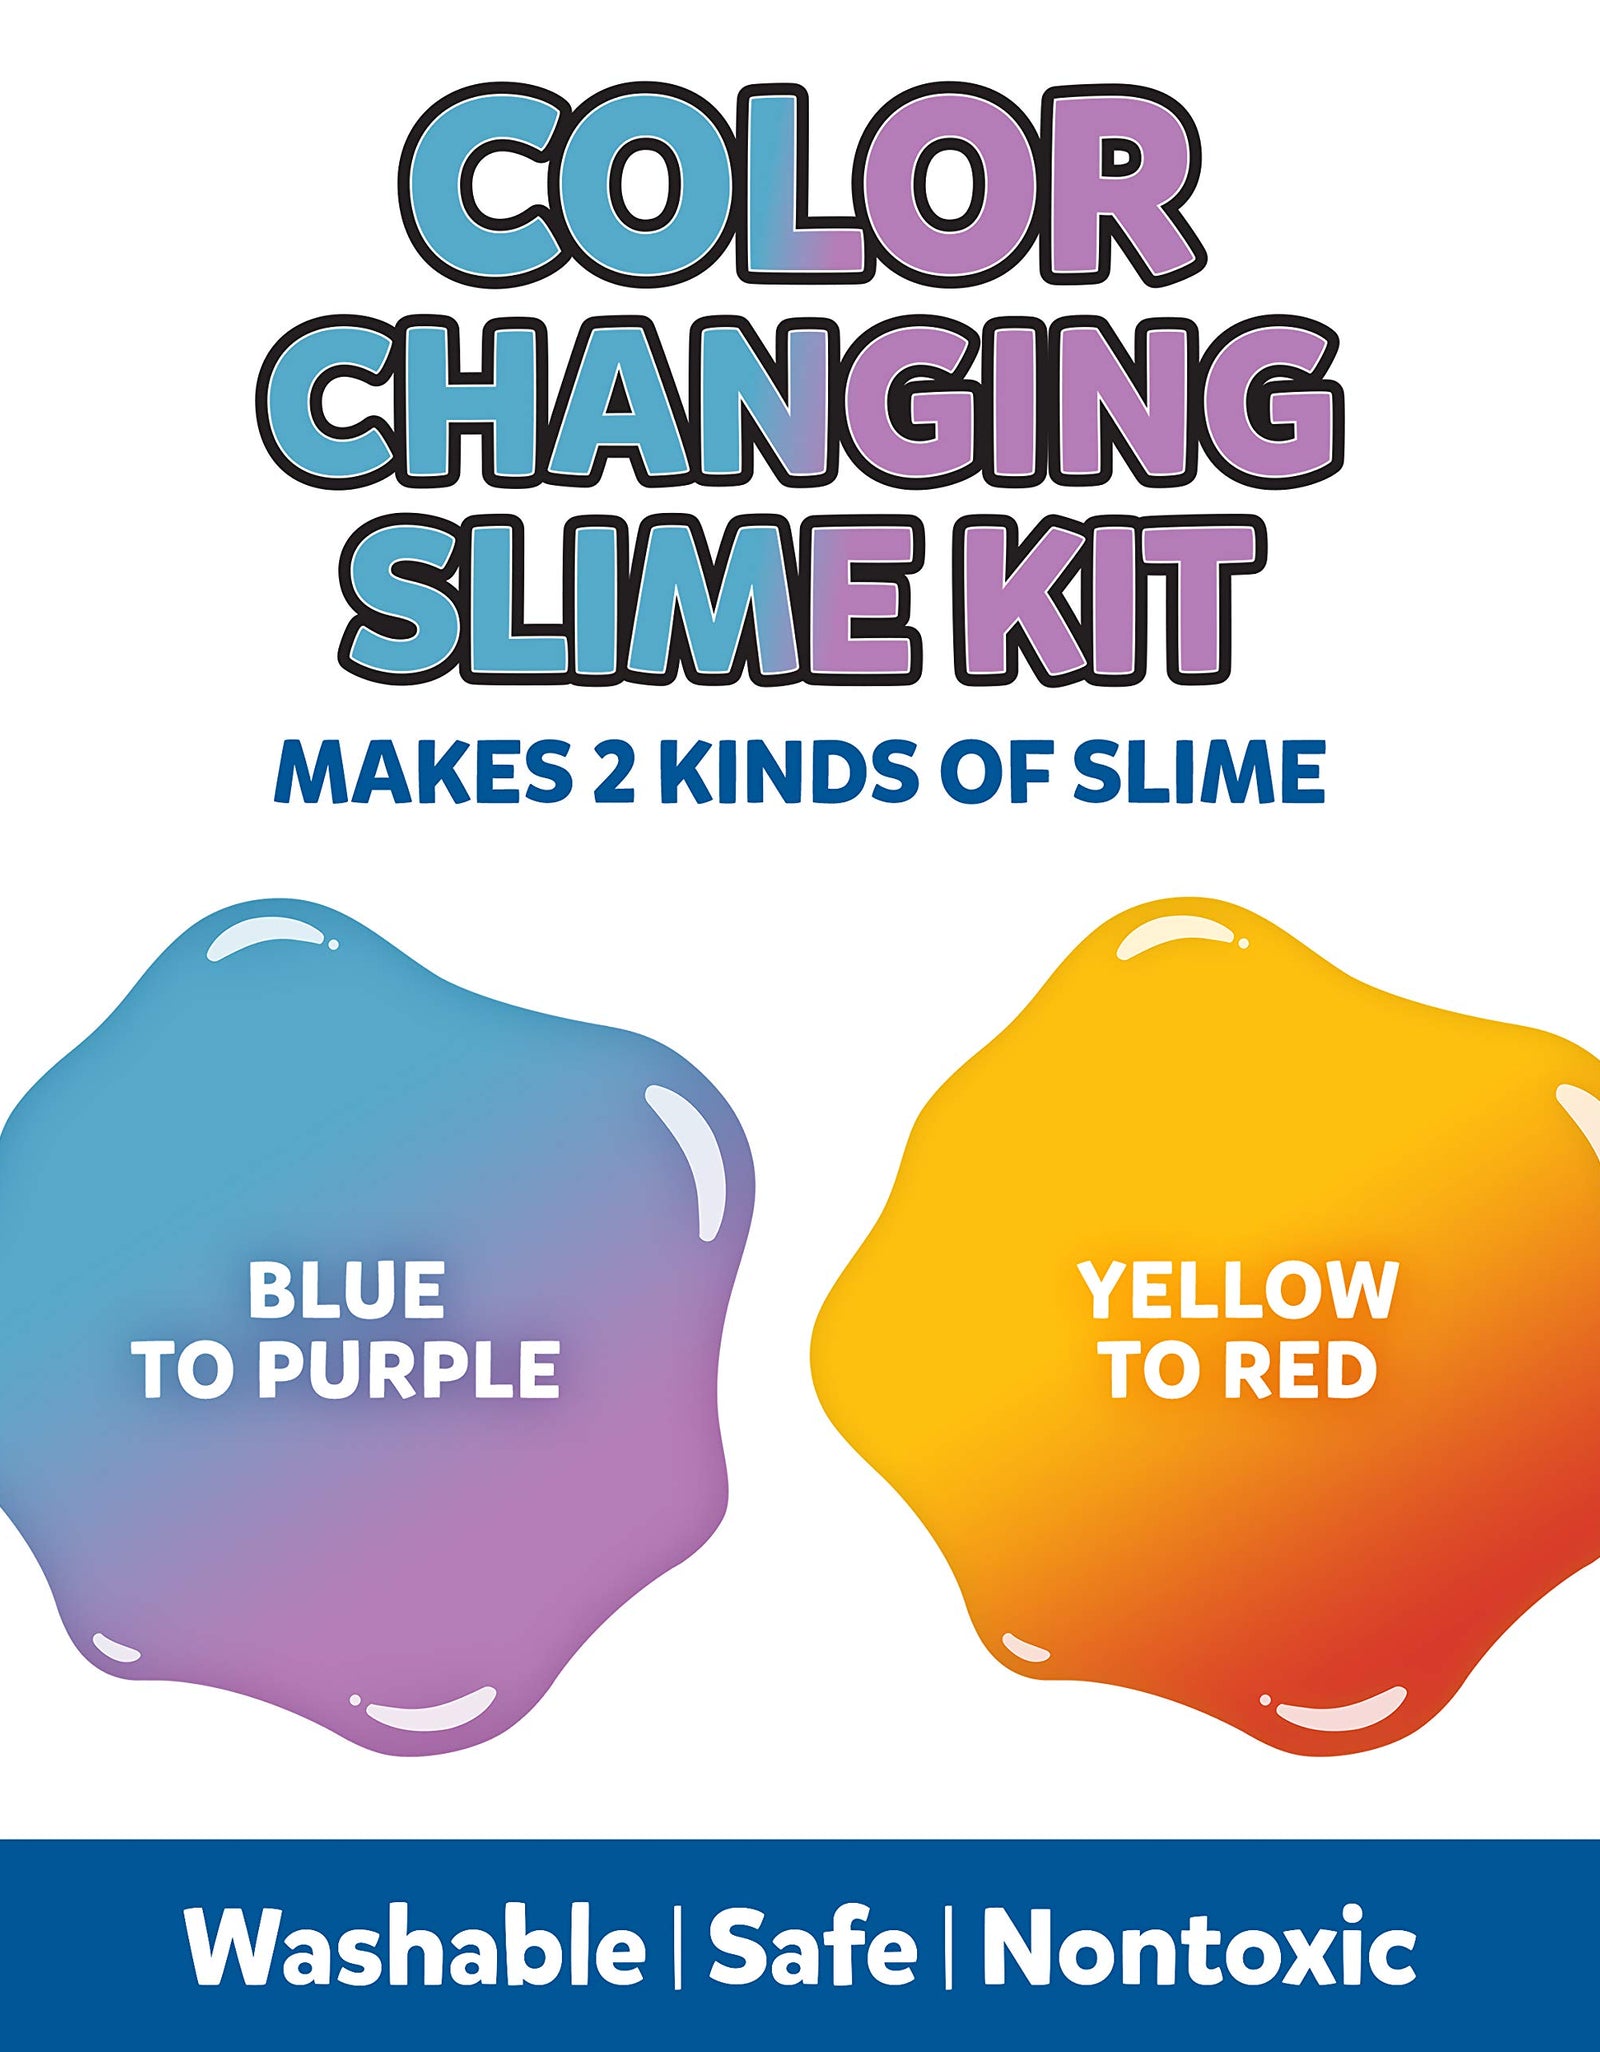 Elmer's Color Changing Slime Kit | Slime Supplies Include Elmer's Color Changing Glue, Elmer's Magical Liquid Slime Activator, UV Light, 5 Piece Kit